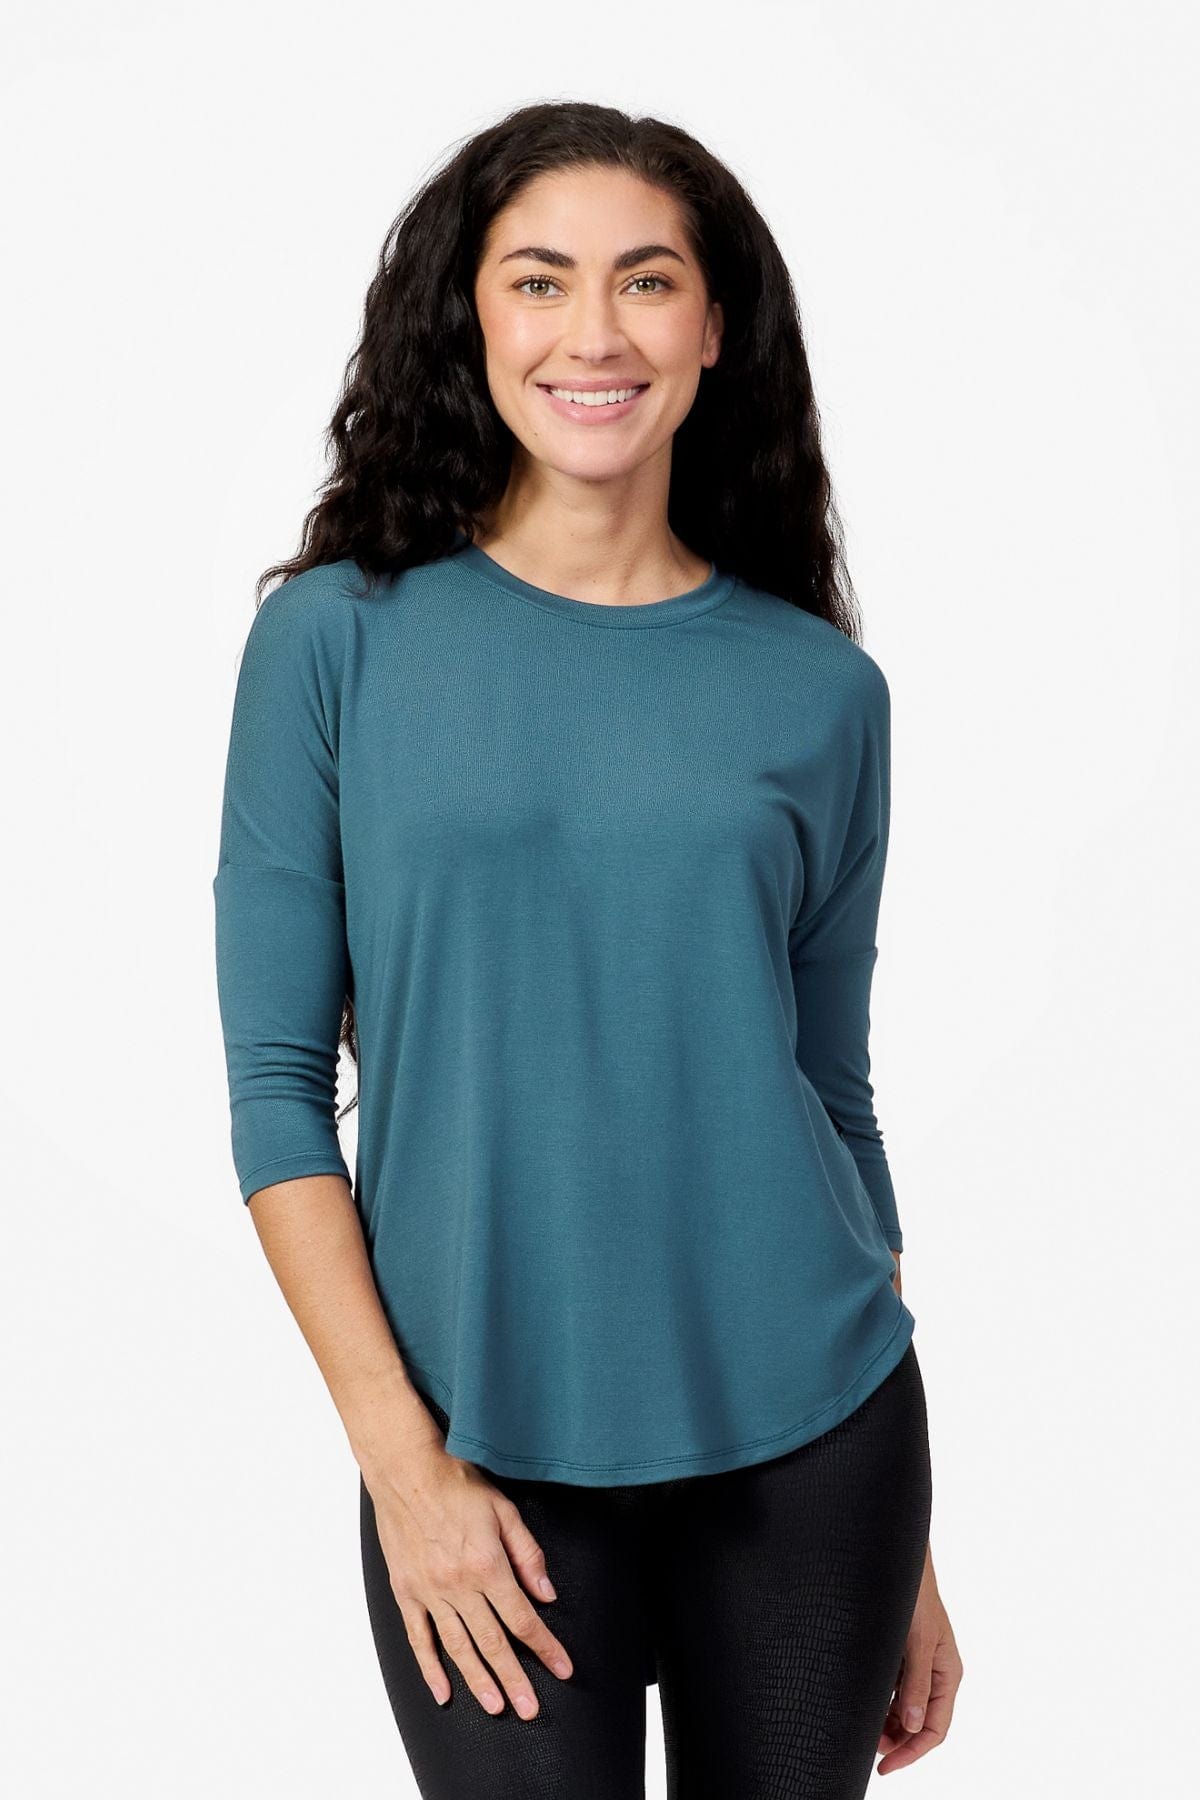 Woman wearing a Teal 3/4 length sleeve shirt